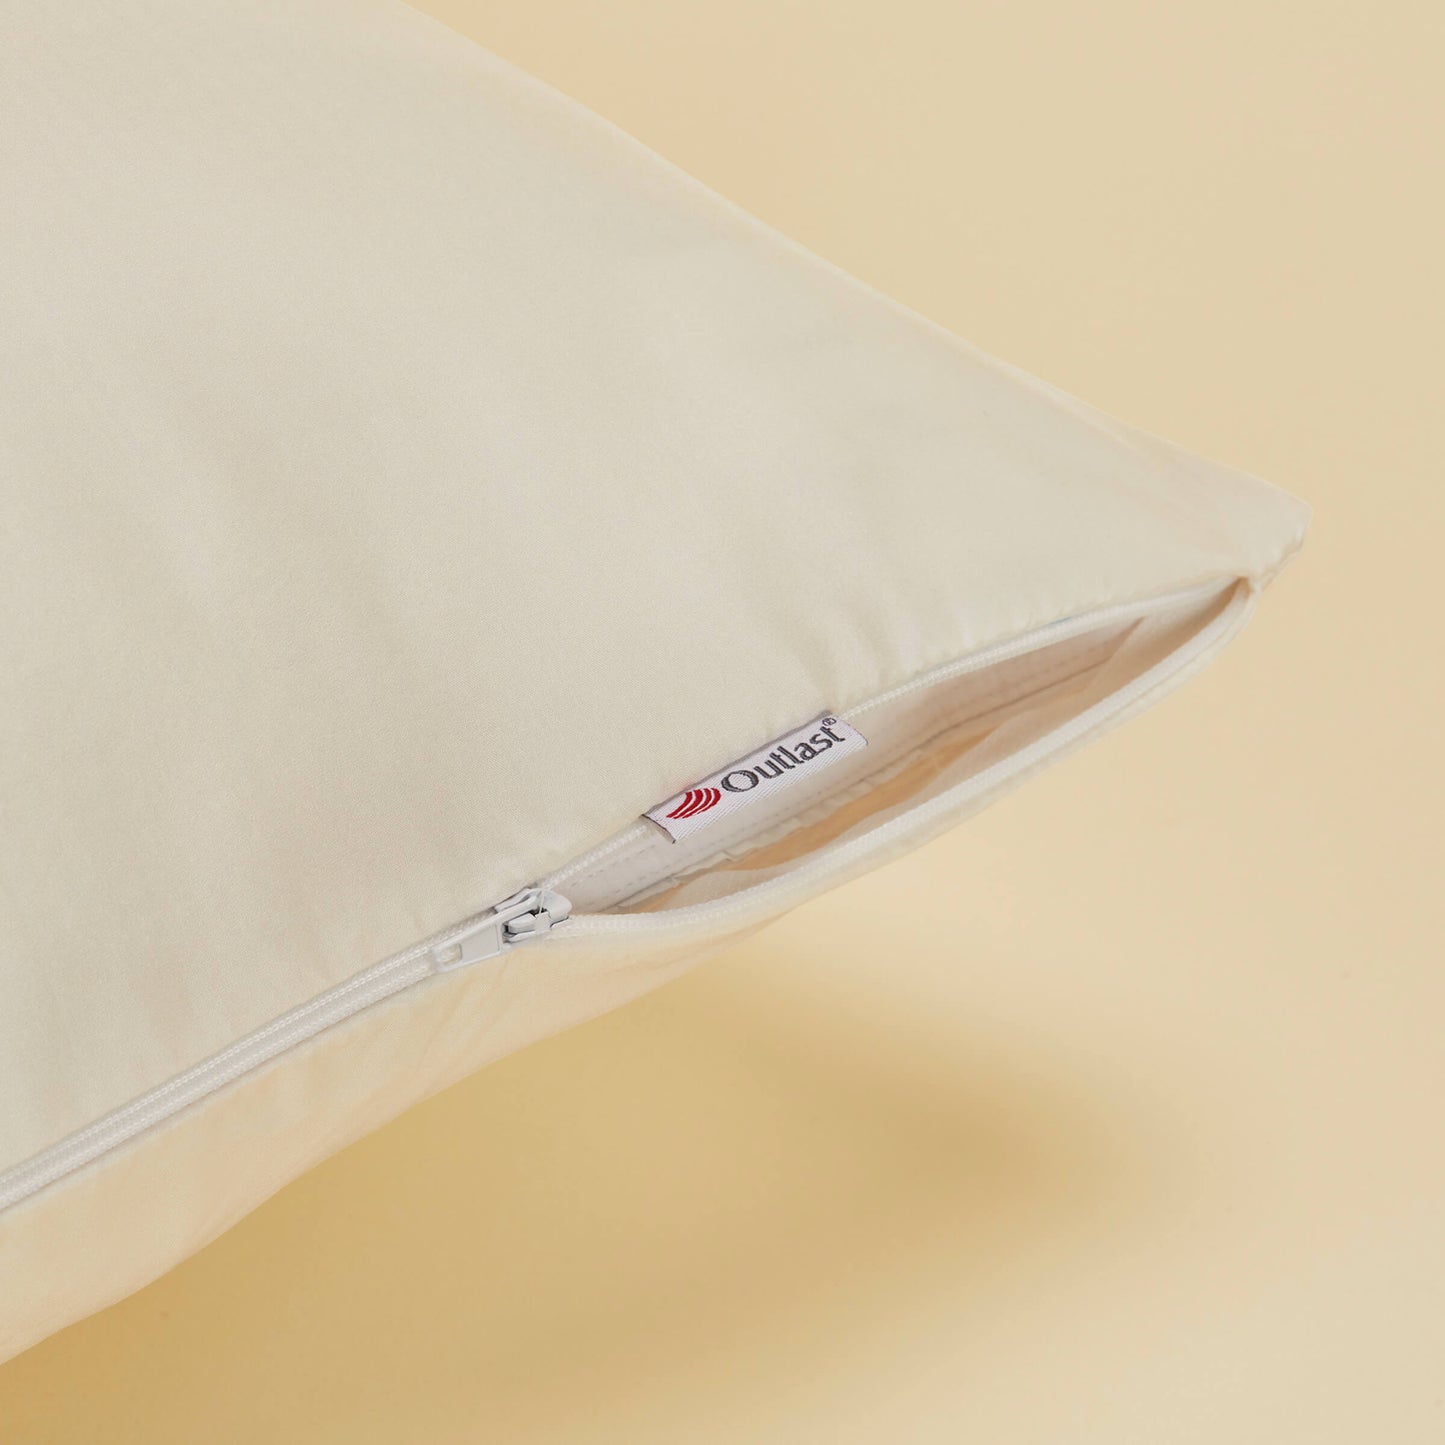 A close up of the zipper on the Slumber Cloud Silk Pillowcase